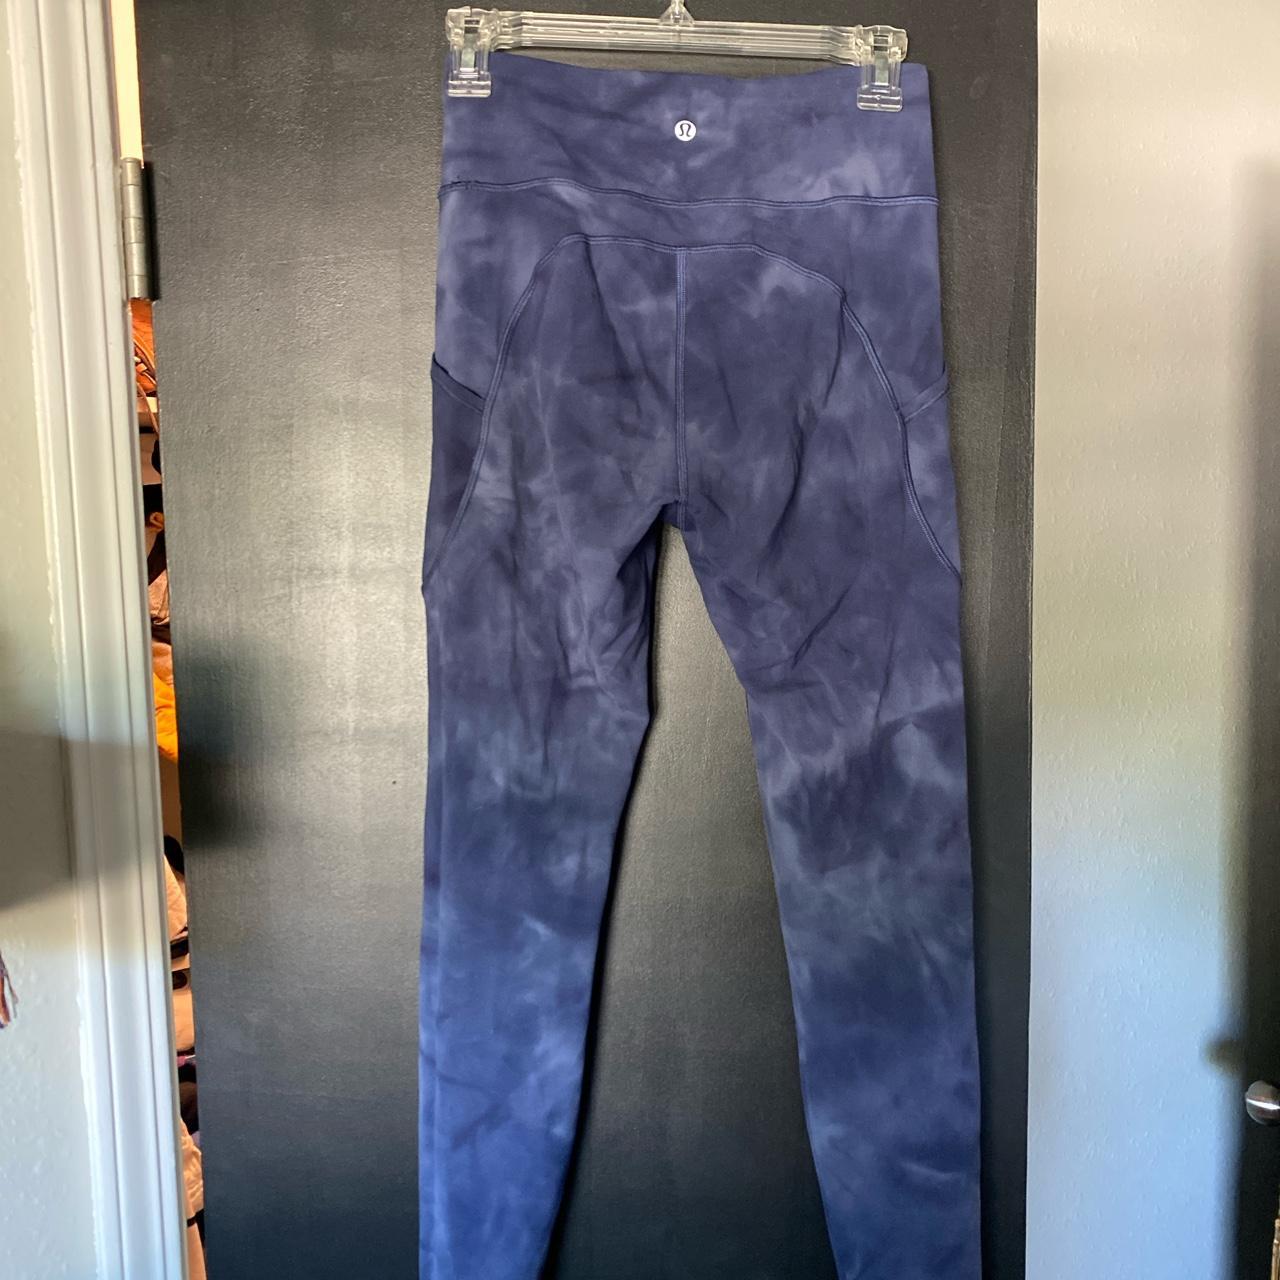 Lulu lemon 3/4 length navy blue leggings! 🌑🦋🌑 - Depop